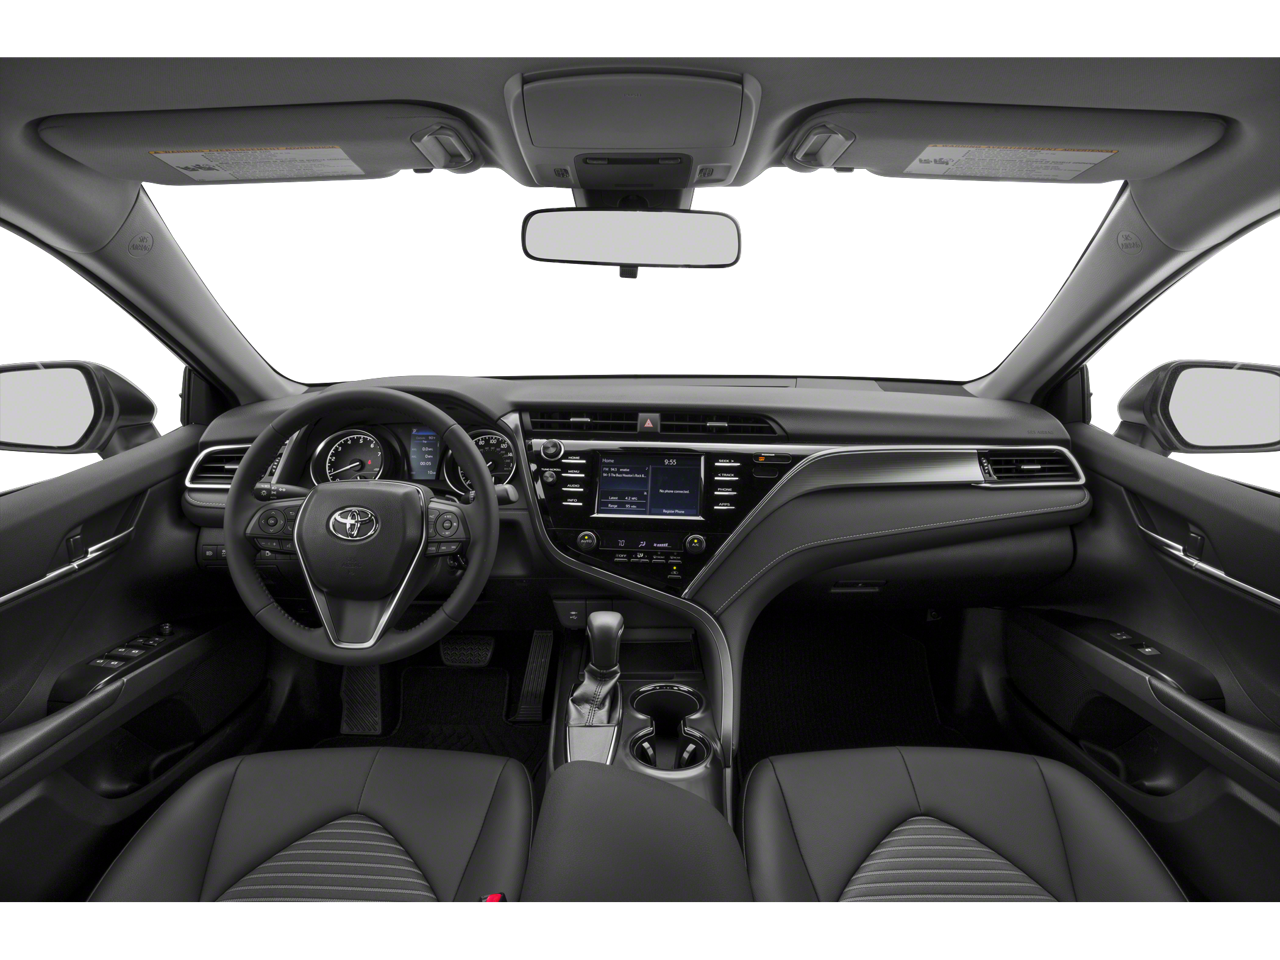 2020 Toyota Camry SE w/AWD, Cruise, Power Seat, Keyless Entry, CarPlay